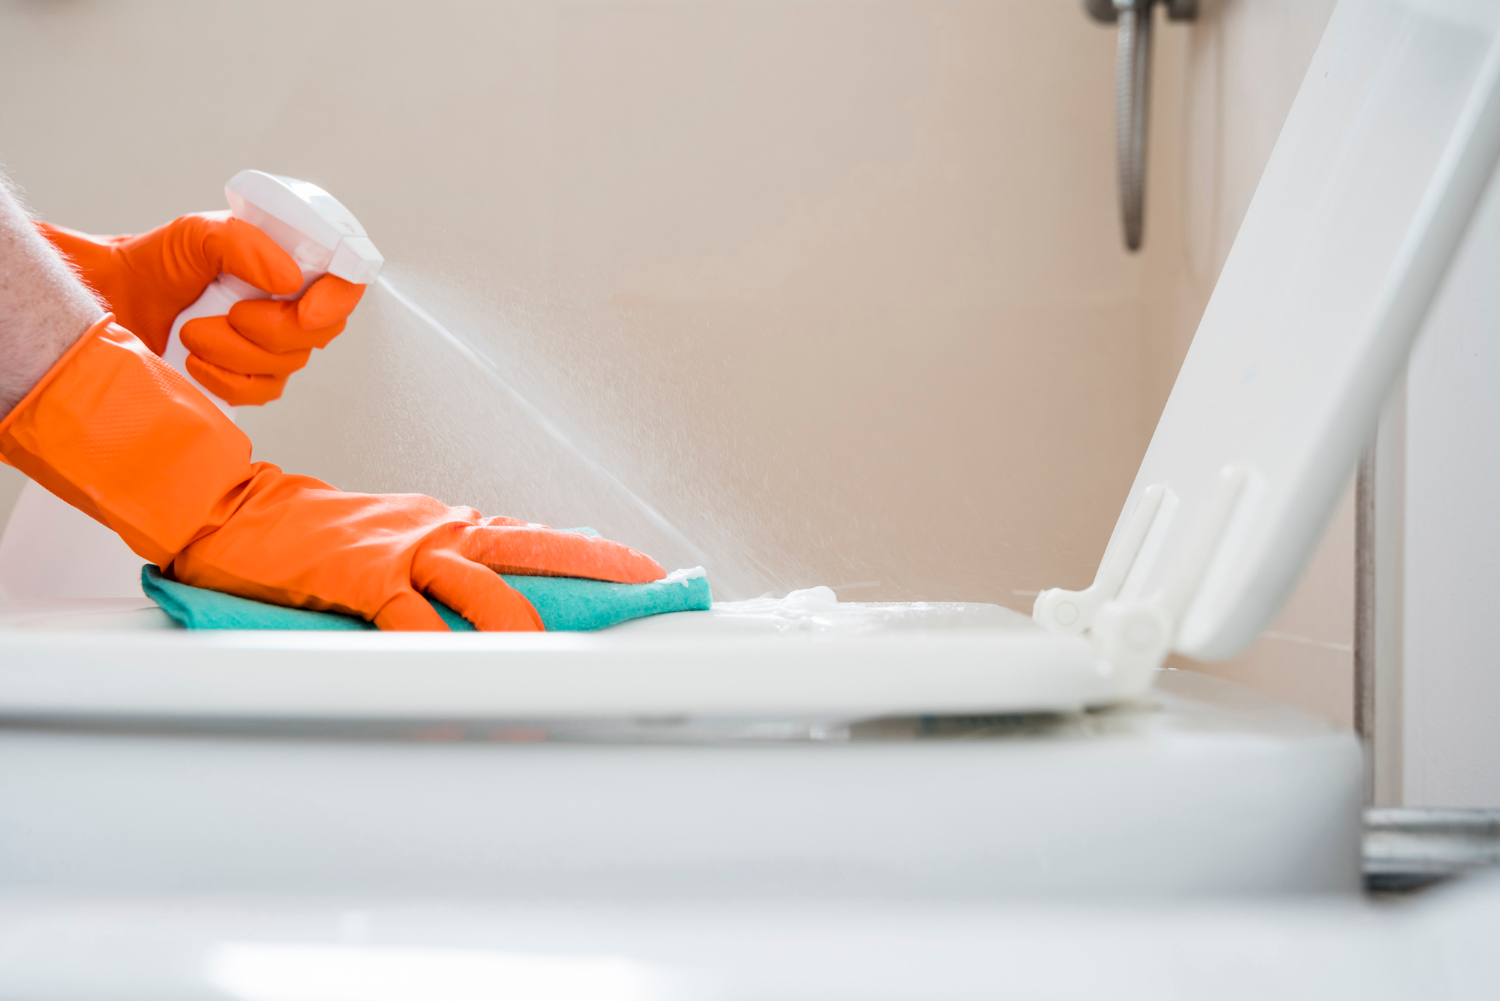 Bathroom Cleaning Secrets: Maintaining Spotlessness & Hygiene